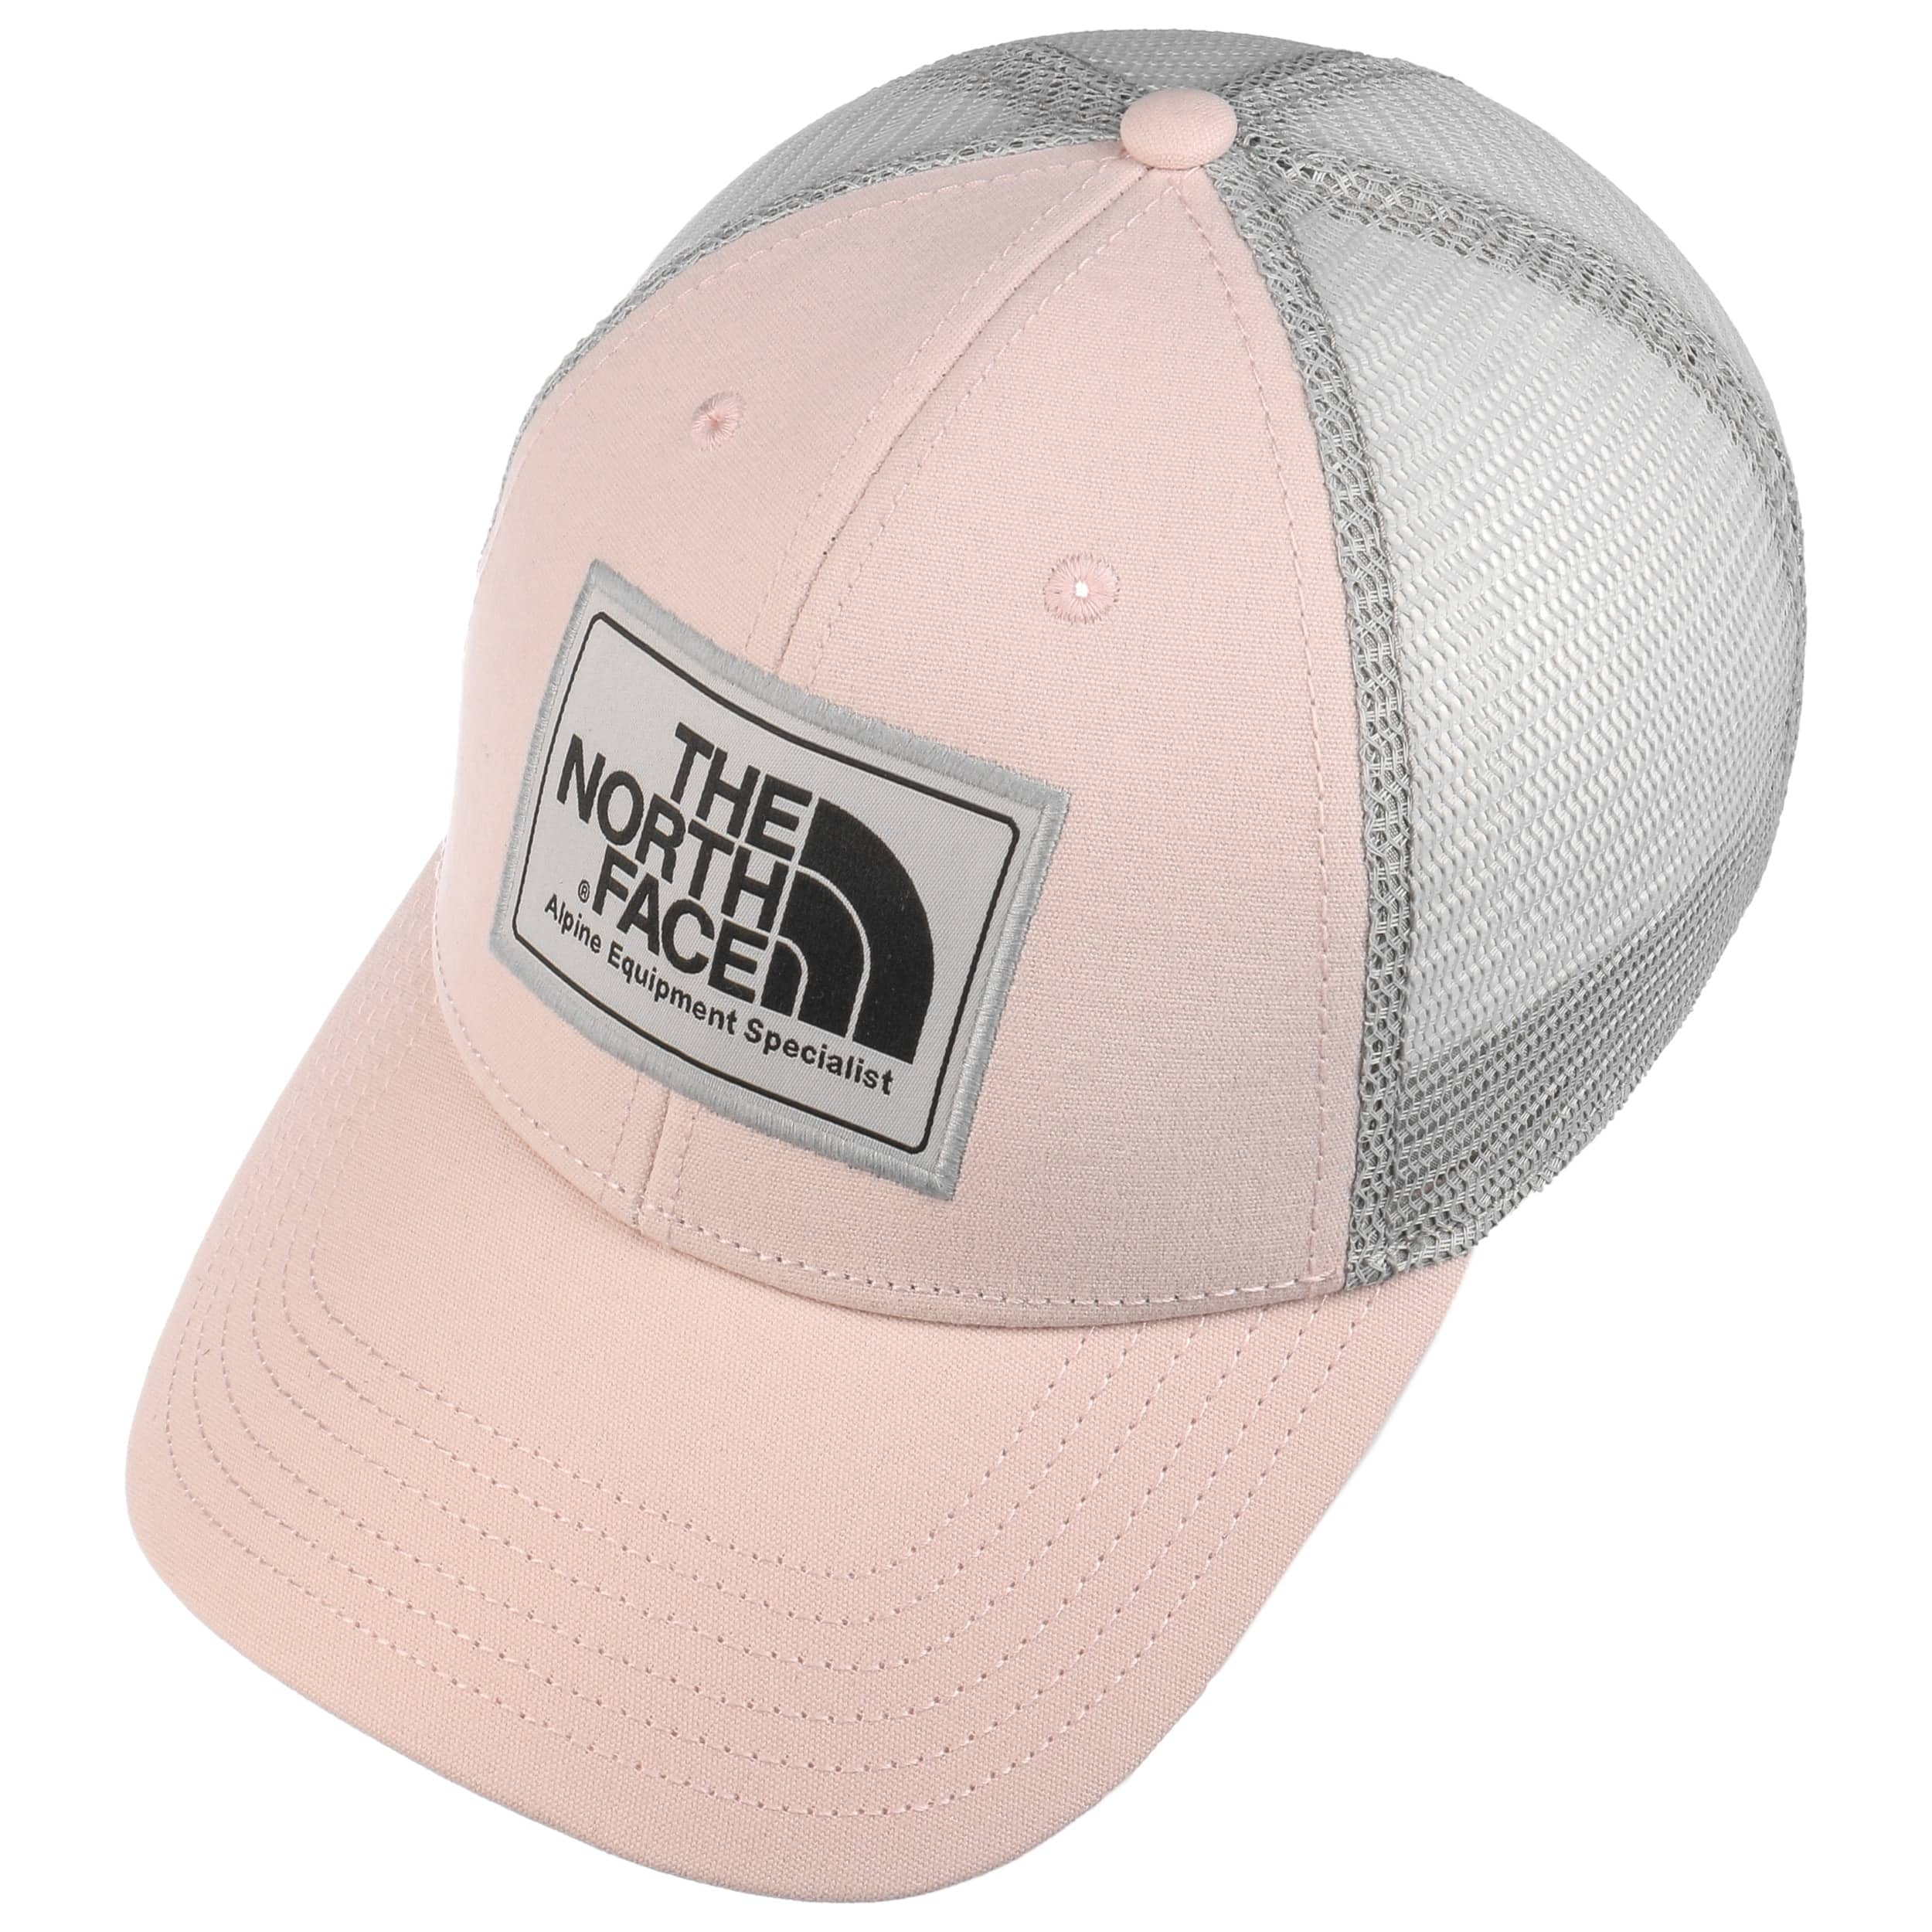 north face women's hats sale